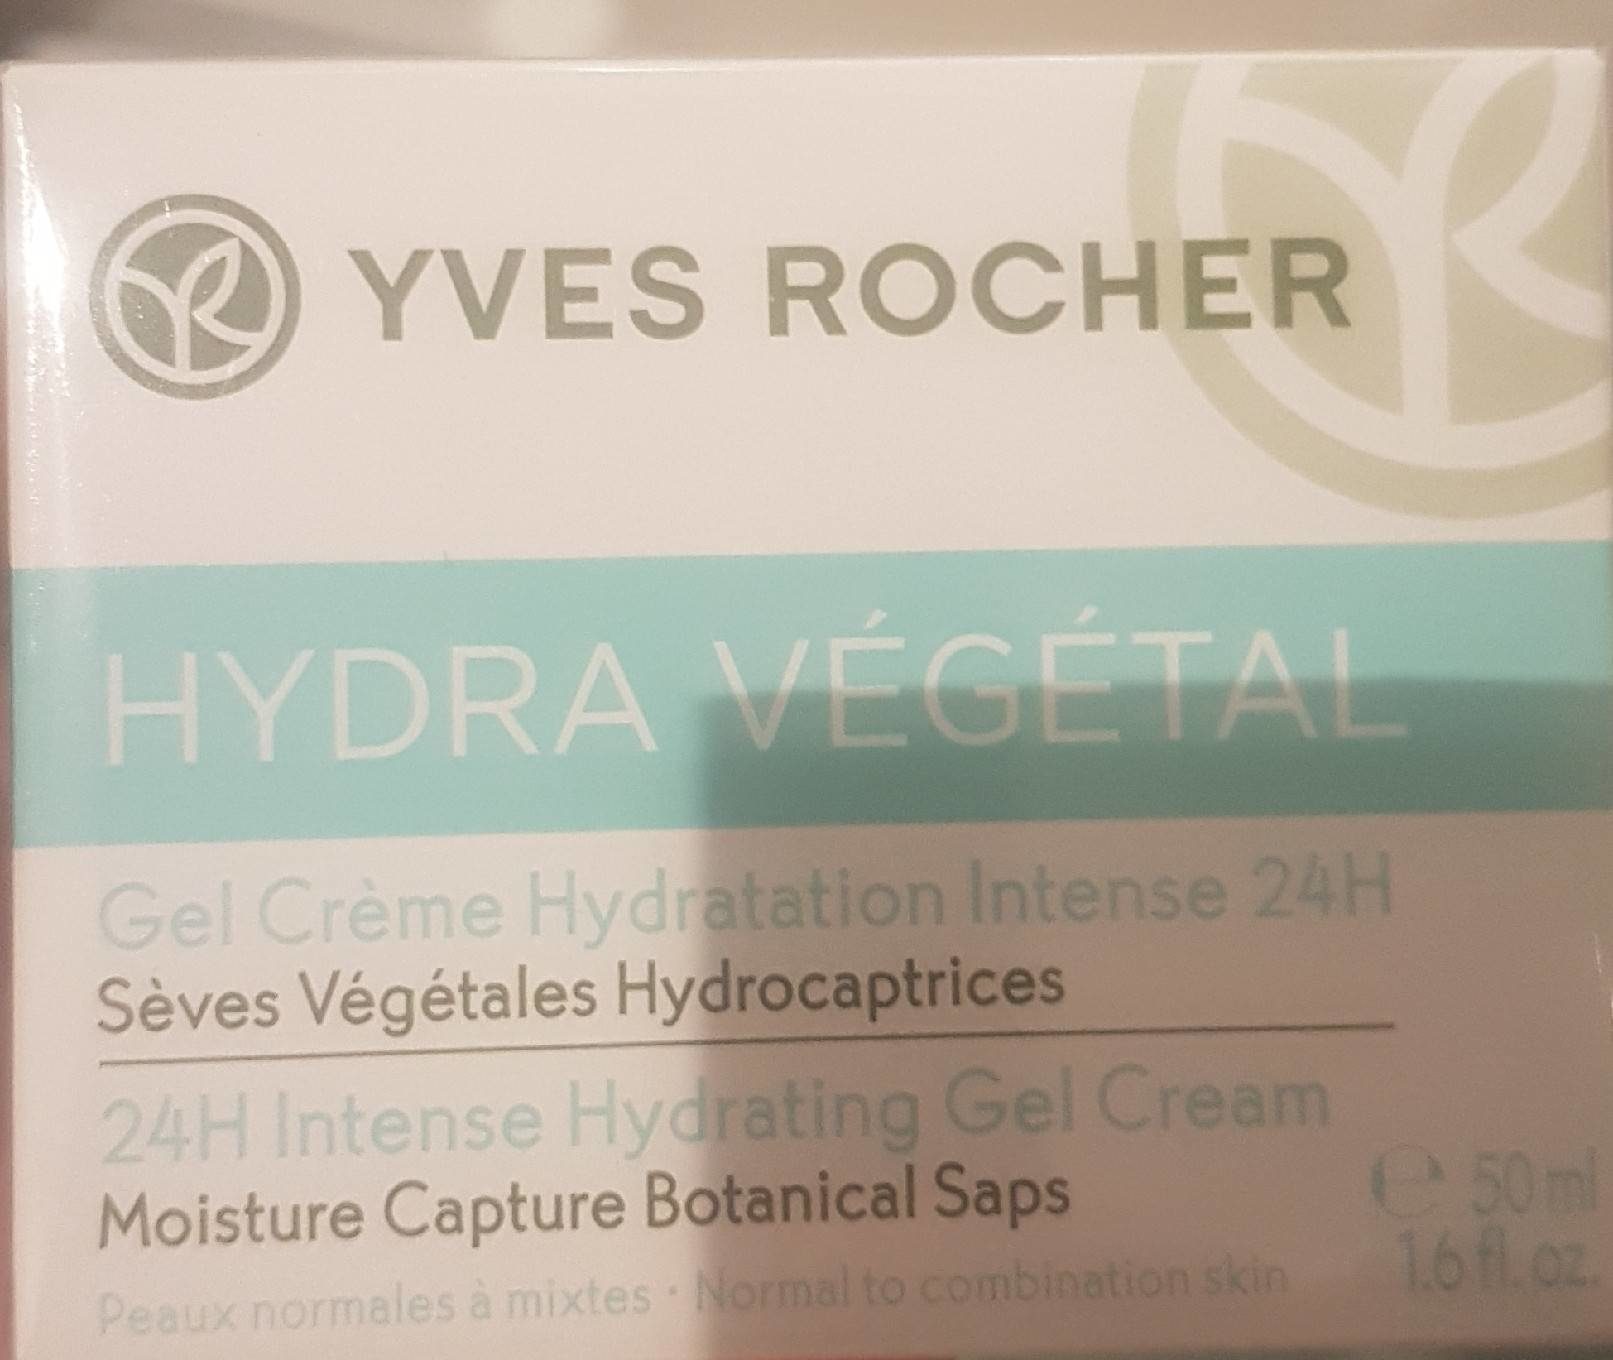 Yves Rocher Hydra Vegetal Creme Hydrating Gel Cream - Produkt - fr